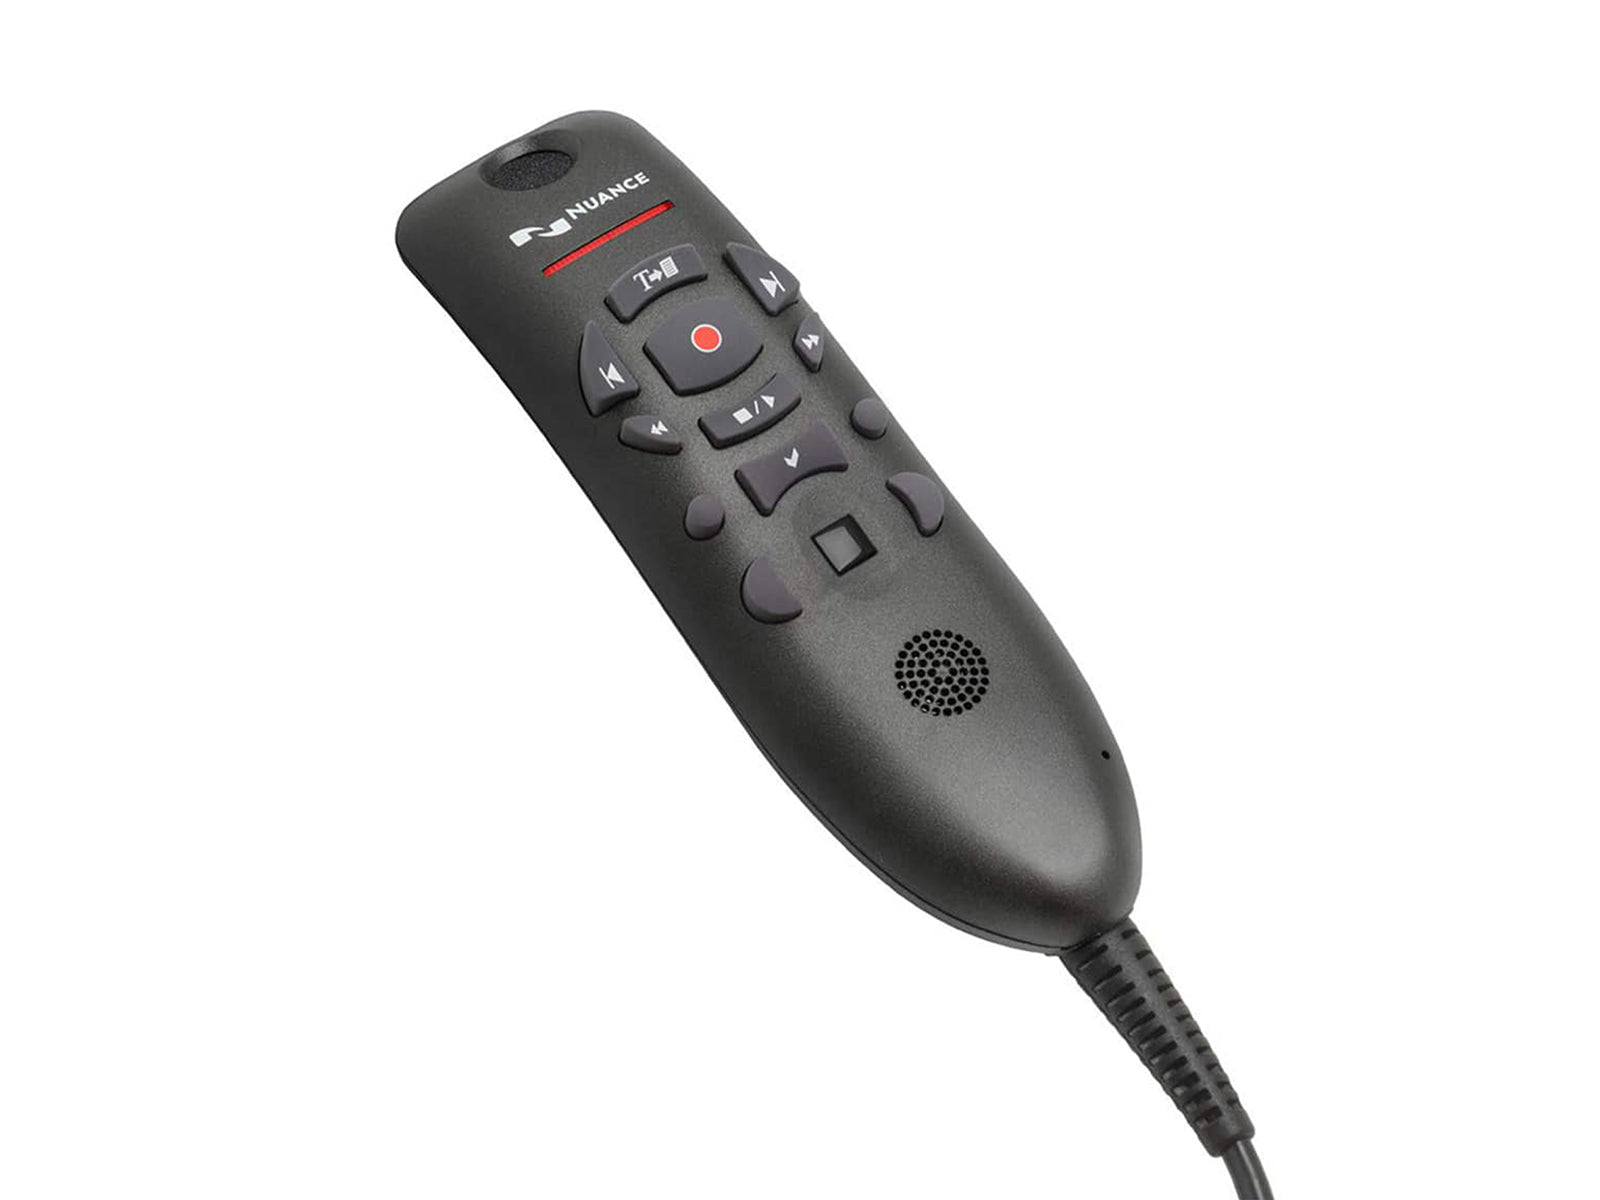 Nuance PowerMic III Dictation Microphone (0POWM3N) Monitors.com 